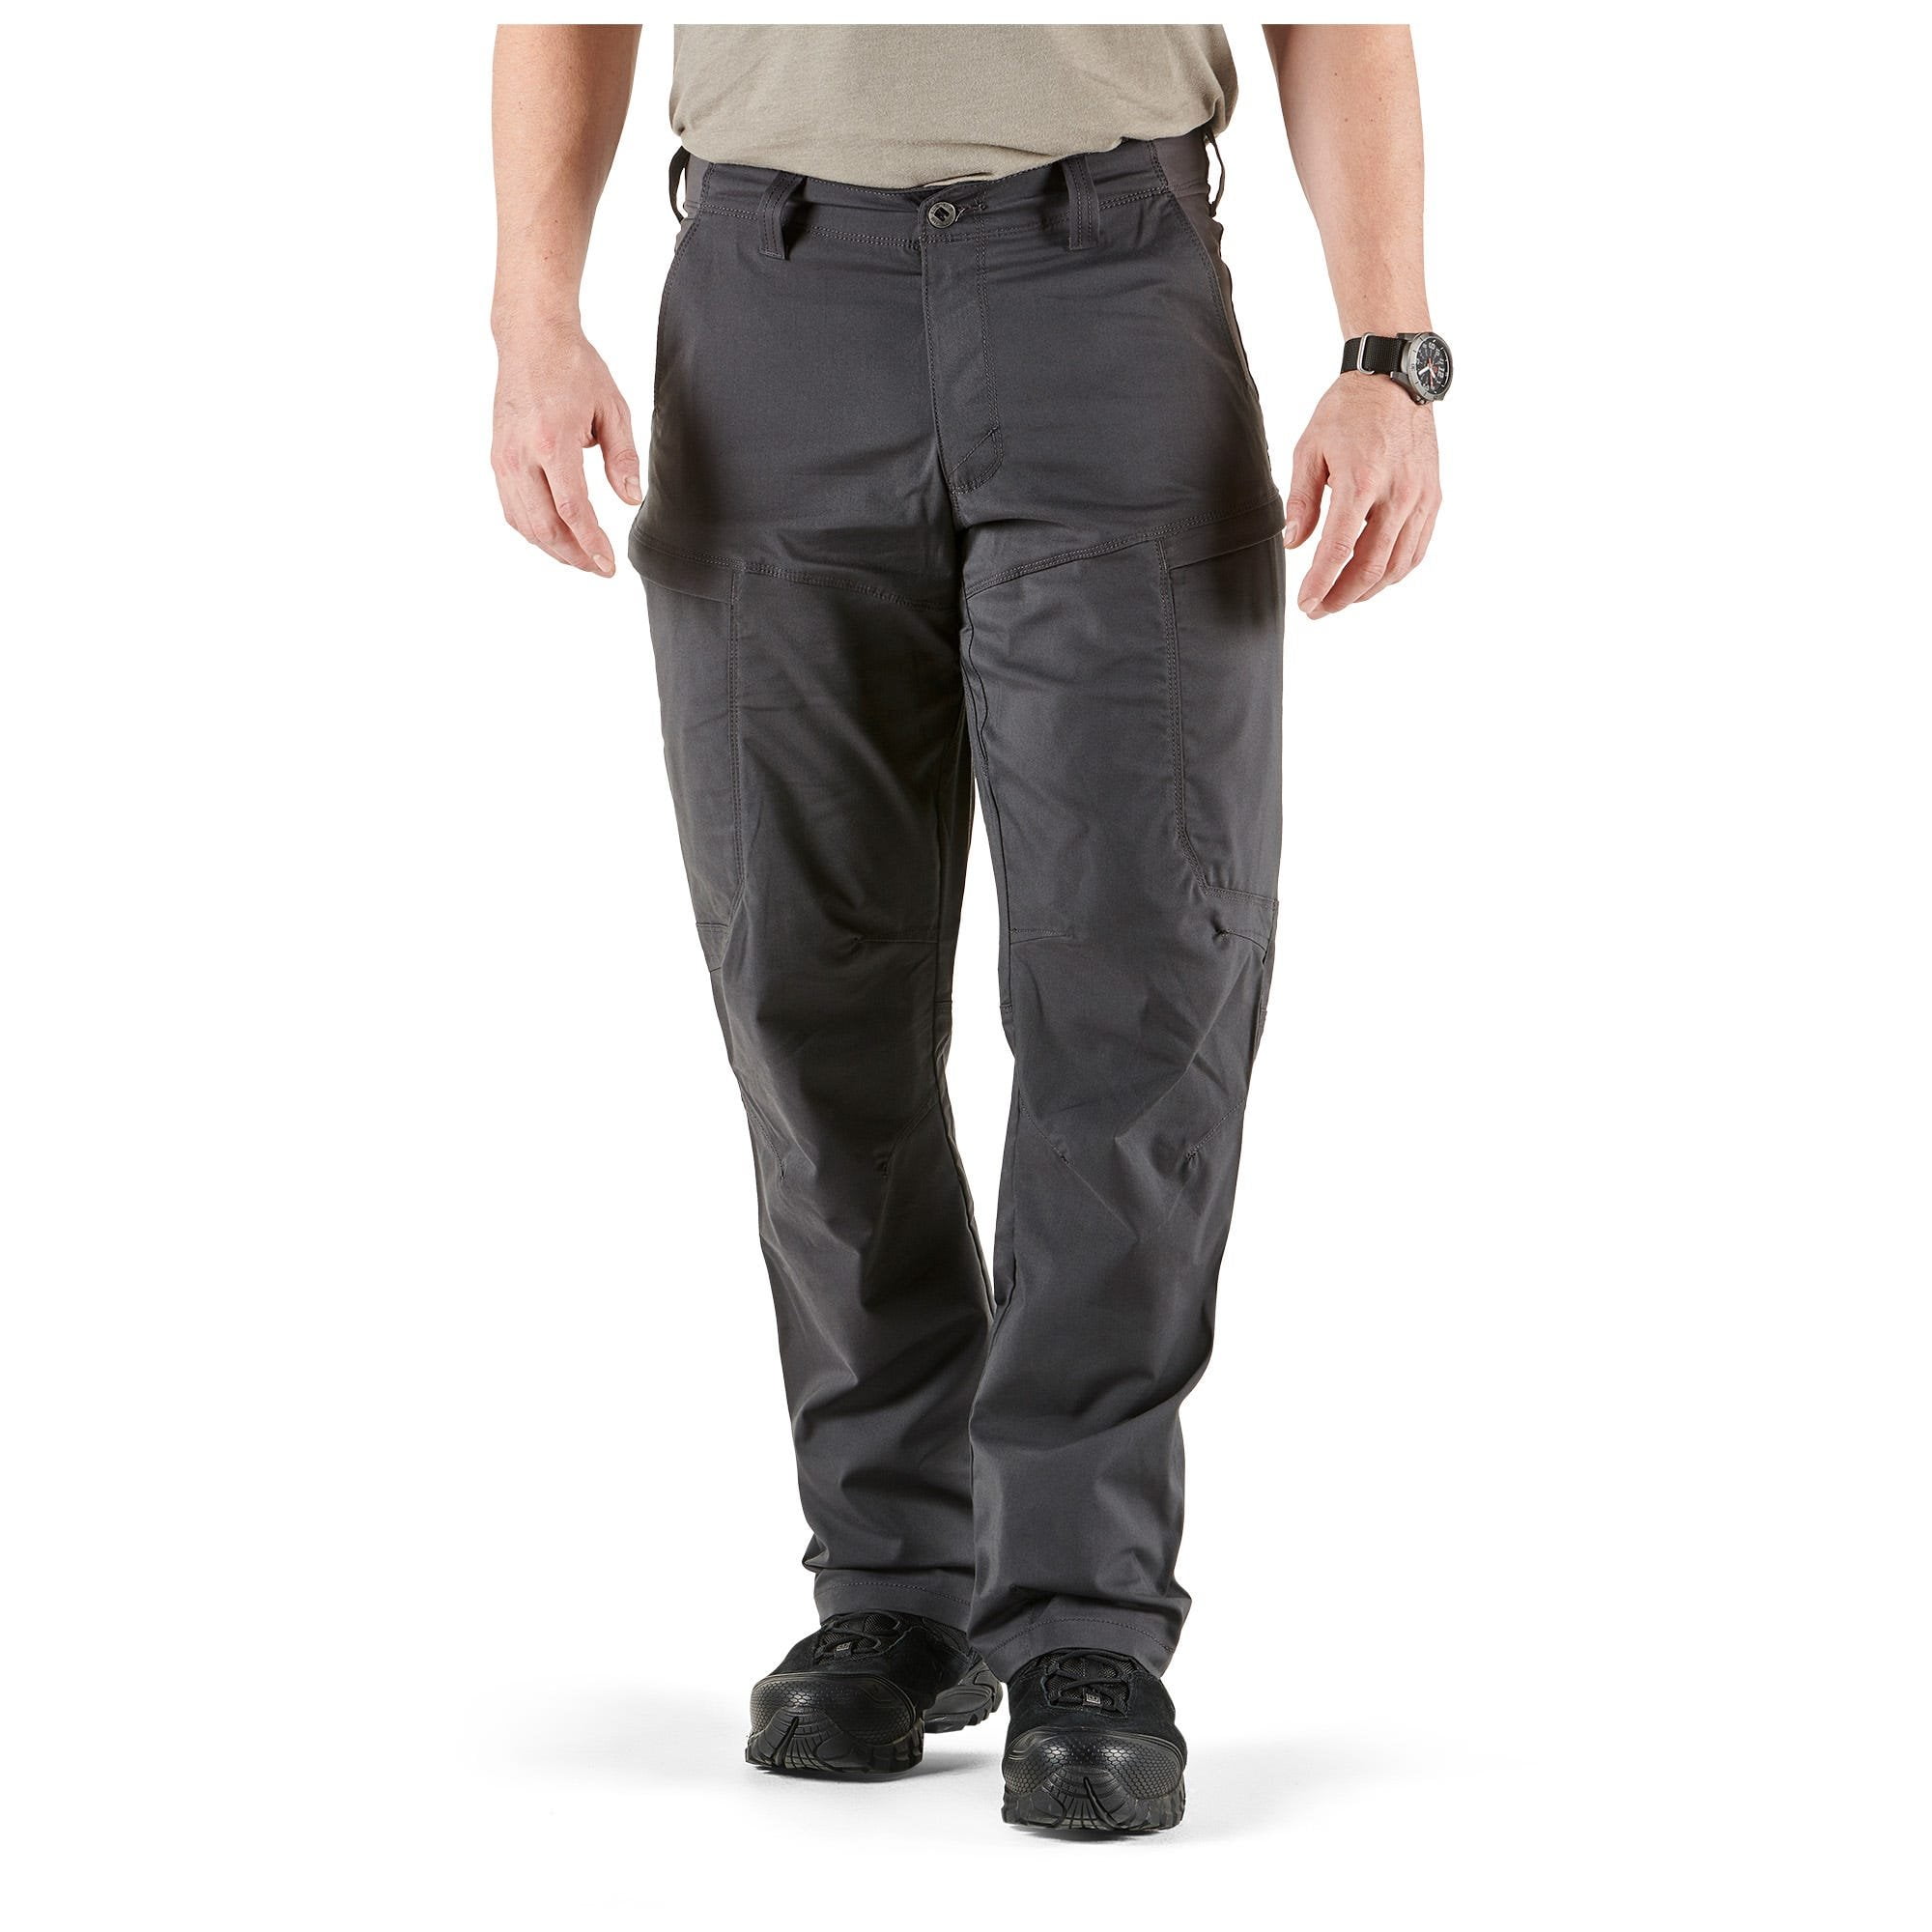 5.11 Tactical Cargo Work Pants, Flex-Tac Fabric, Gusseted, Teflon Finish, Volcanic, x 36L, Style - Walmart.com